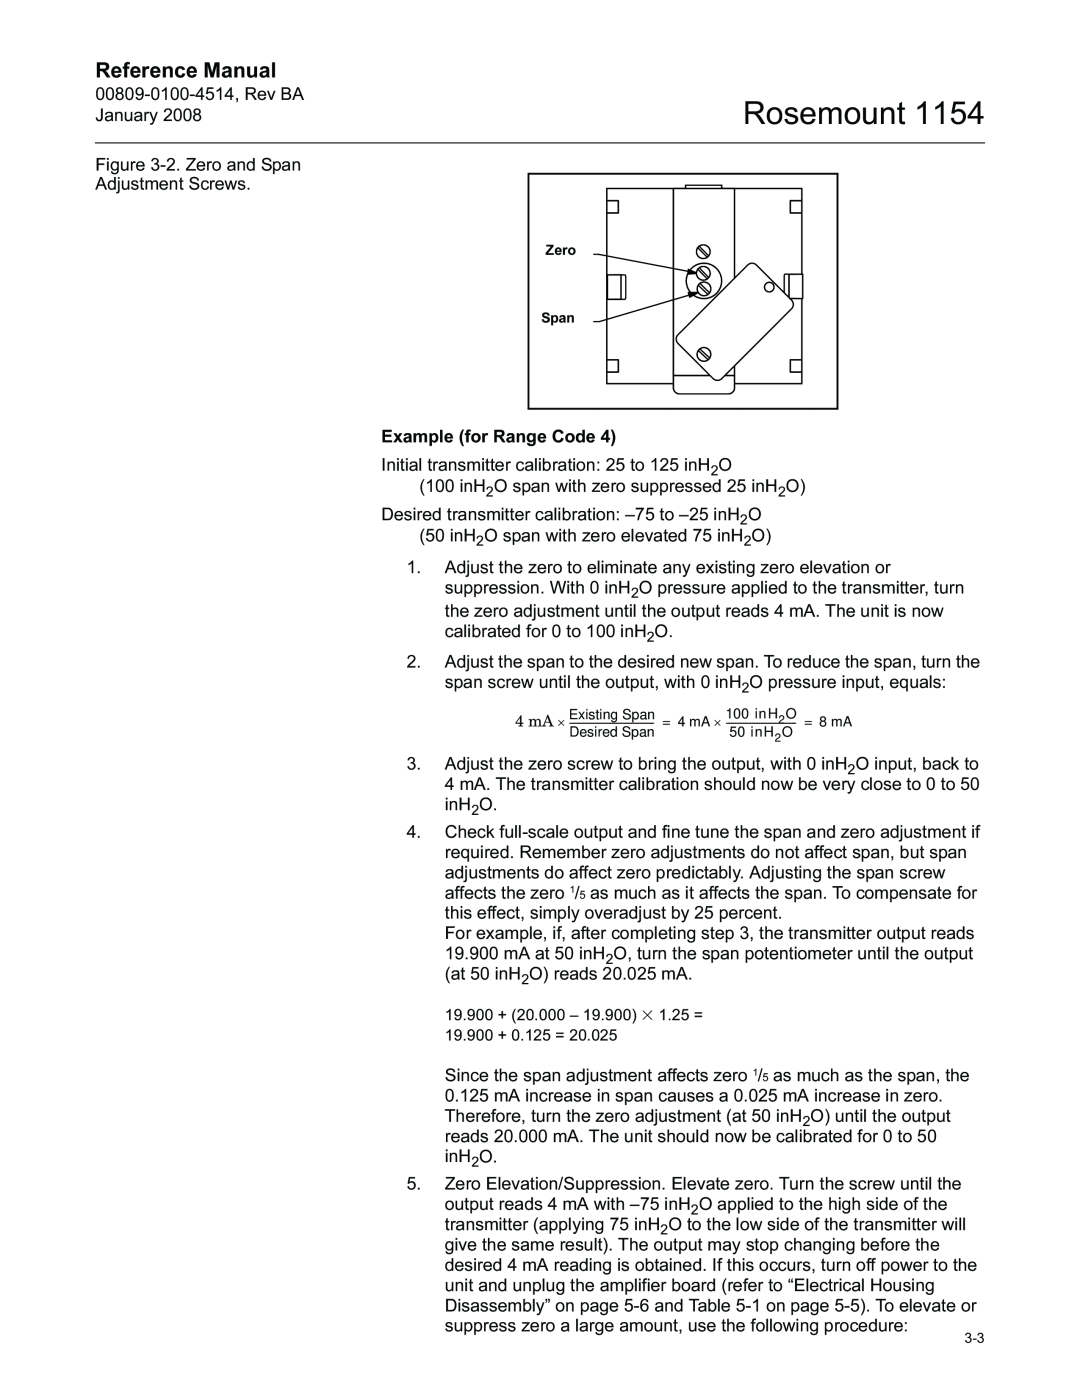 Emerson 1154, 00809-0100-4514 manual Rosemount, Reference Manual, 4 mA ×, 19.900 + 20.000 - 19.900 1.25 = 19.900 + 0.125 = 